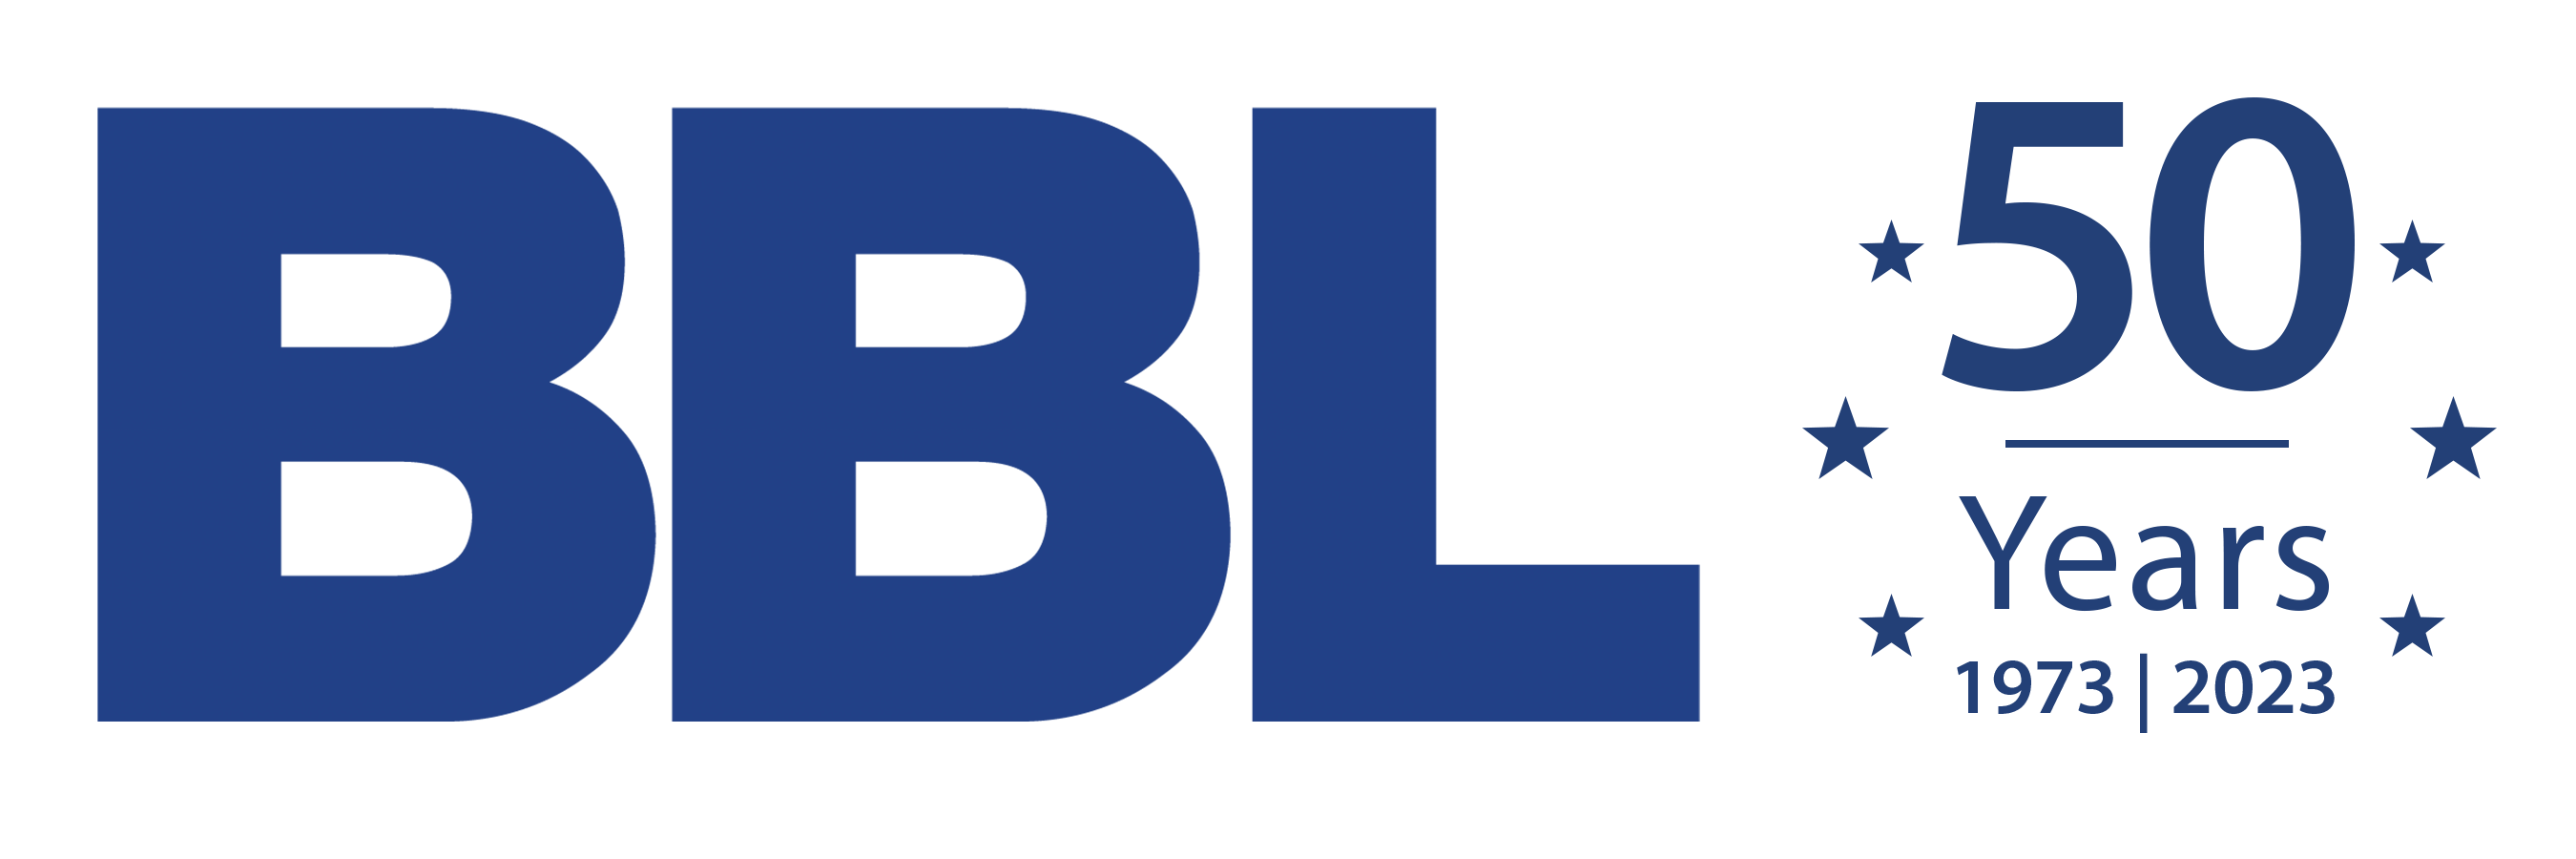 BBL Companies